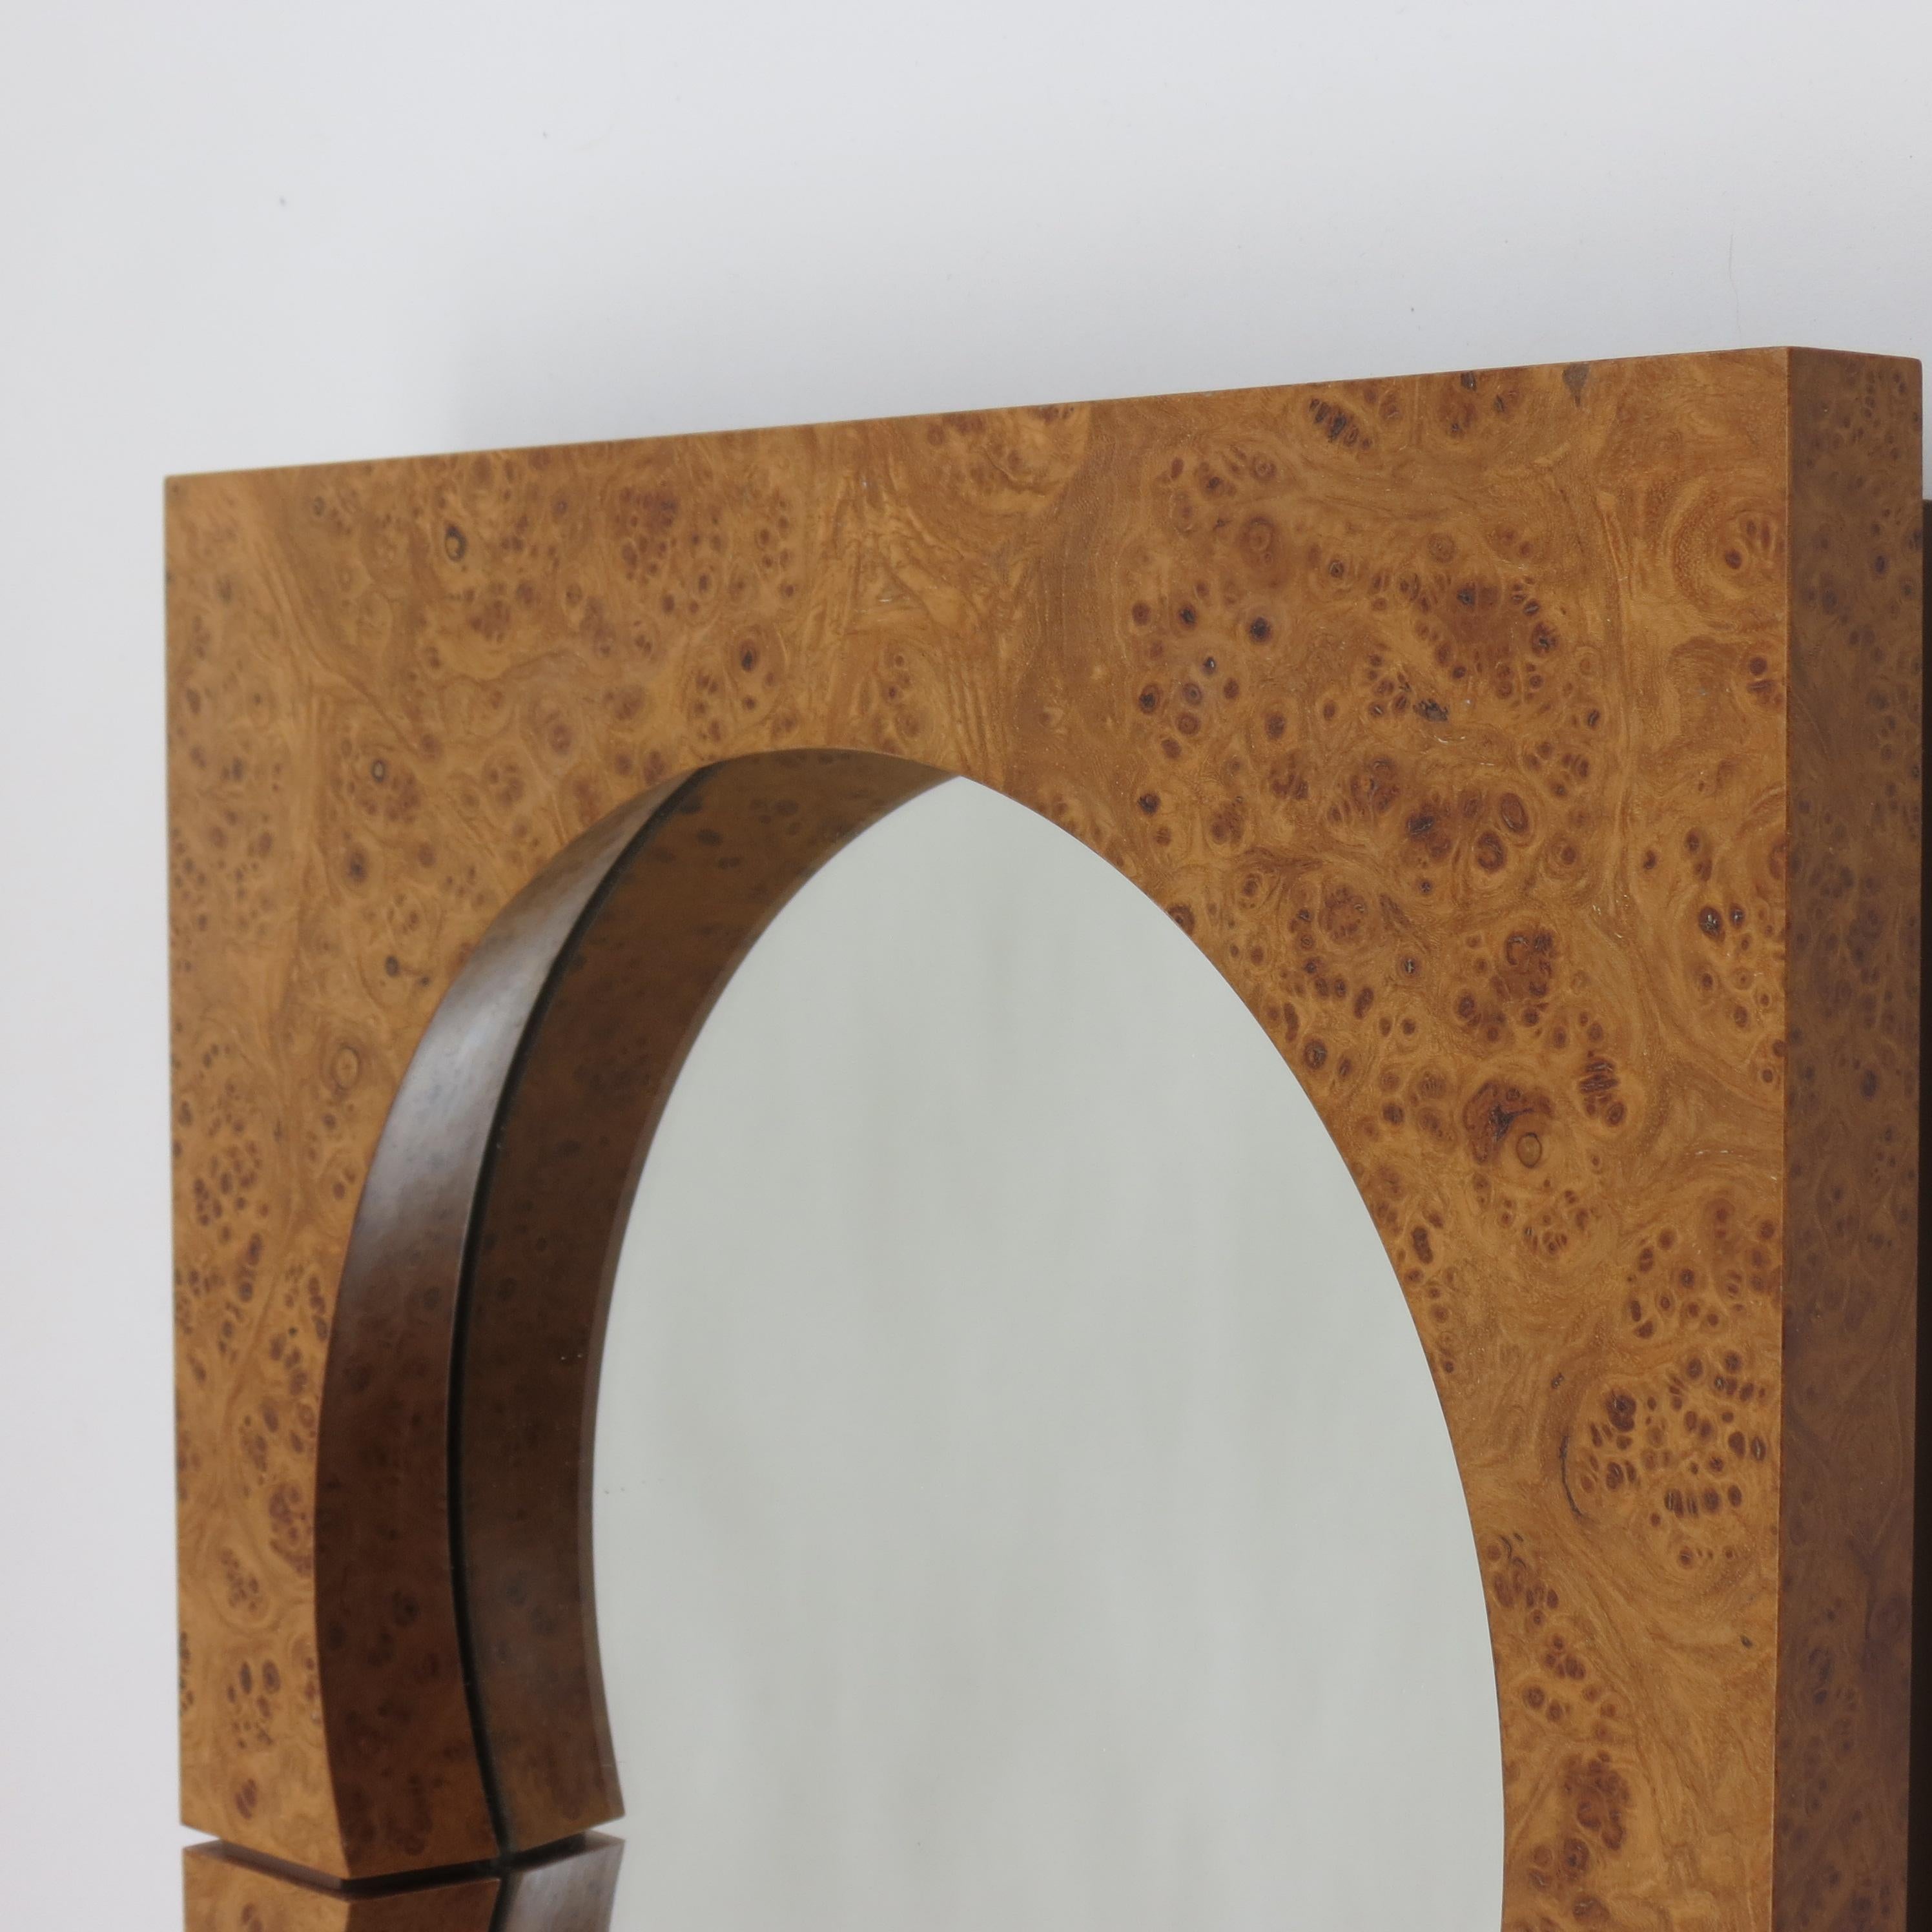 Hand Produced Bespoke Burr Elmwood Wall Mirror Desmond Ryan Mirror, 1990s For Sale 3